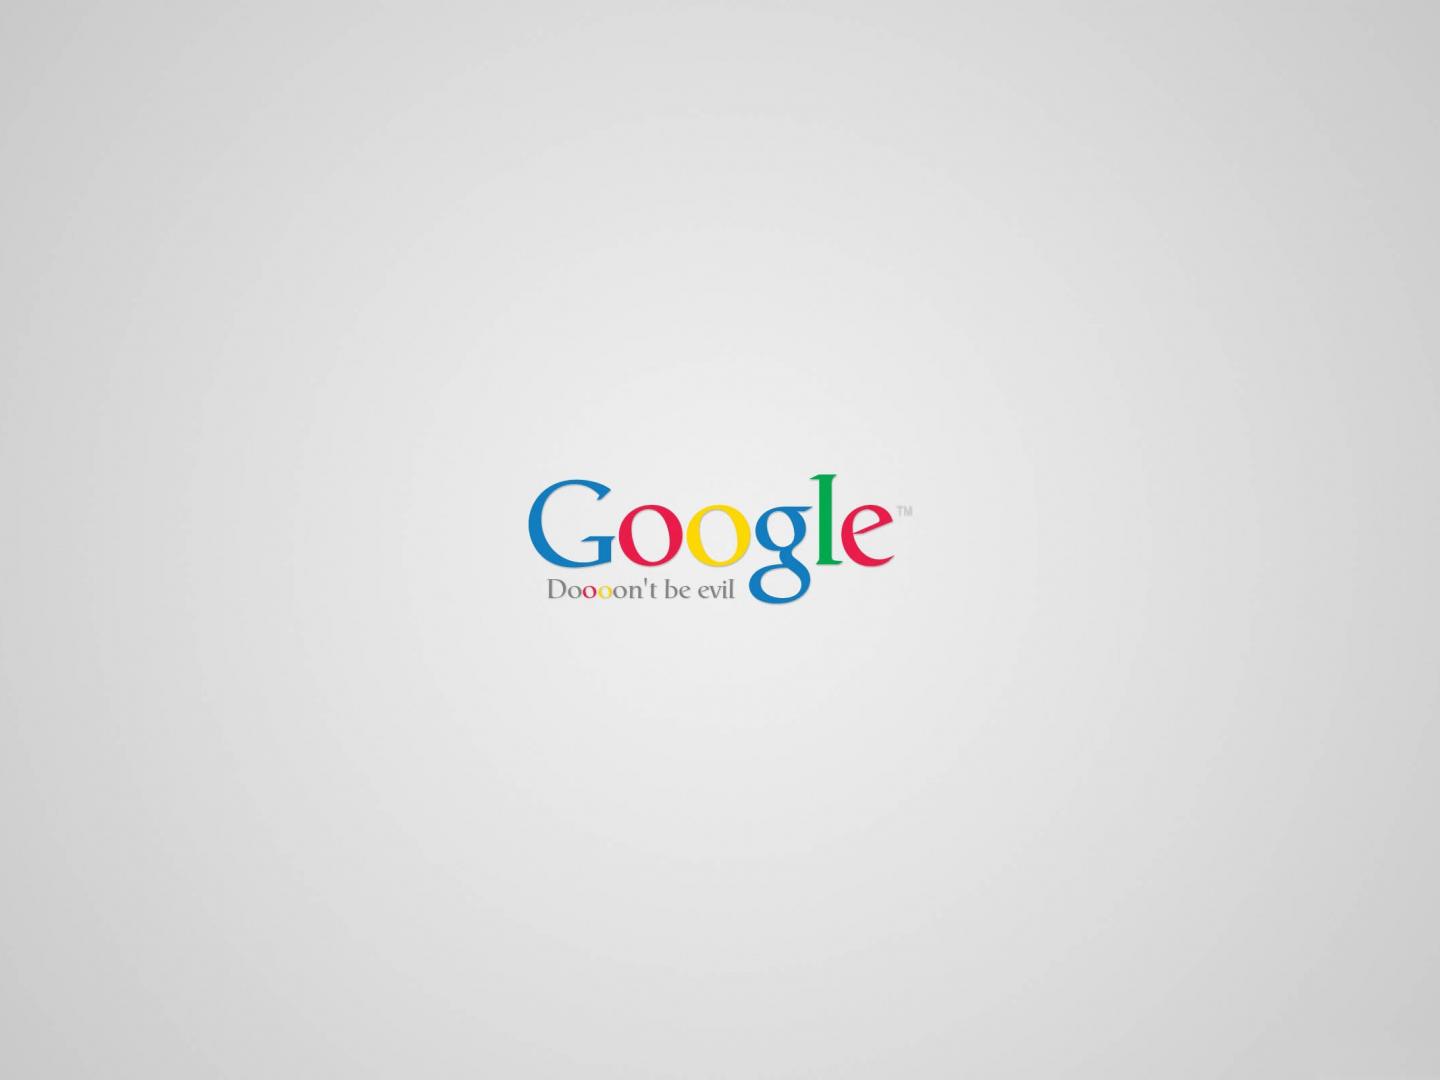 Wallpaper Google Puter Background